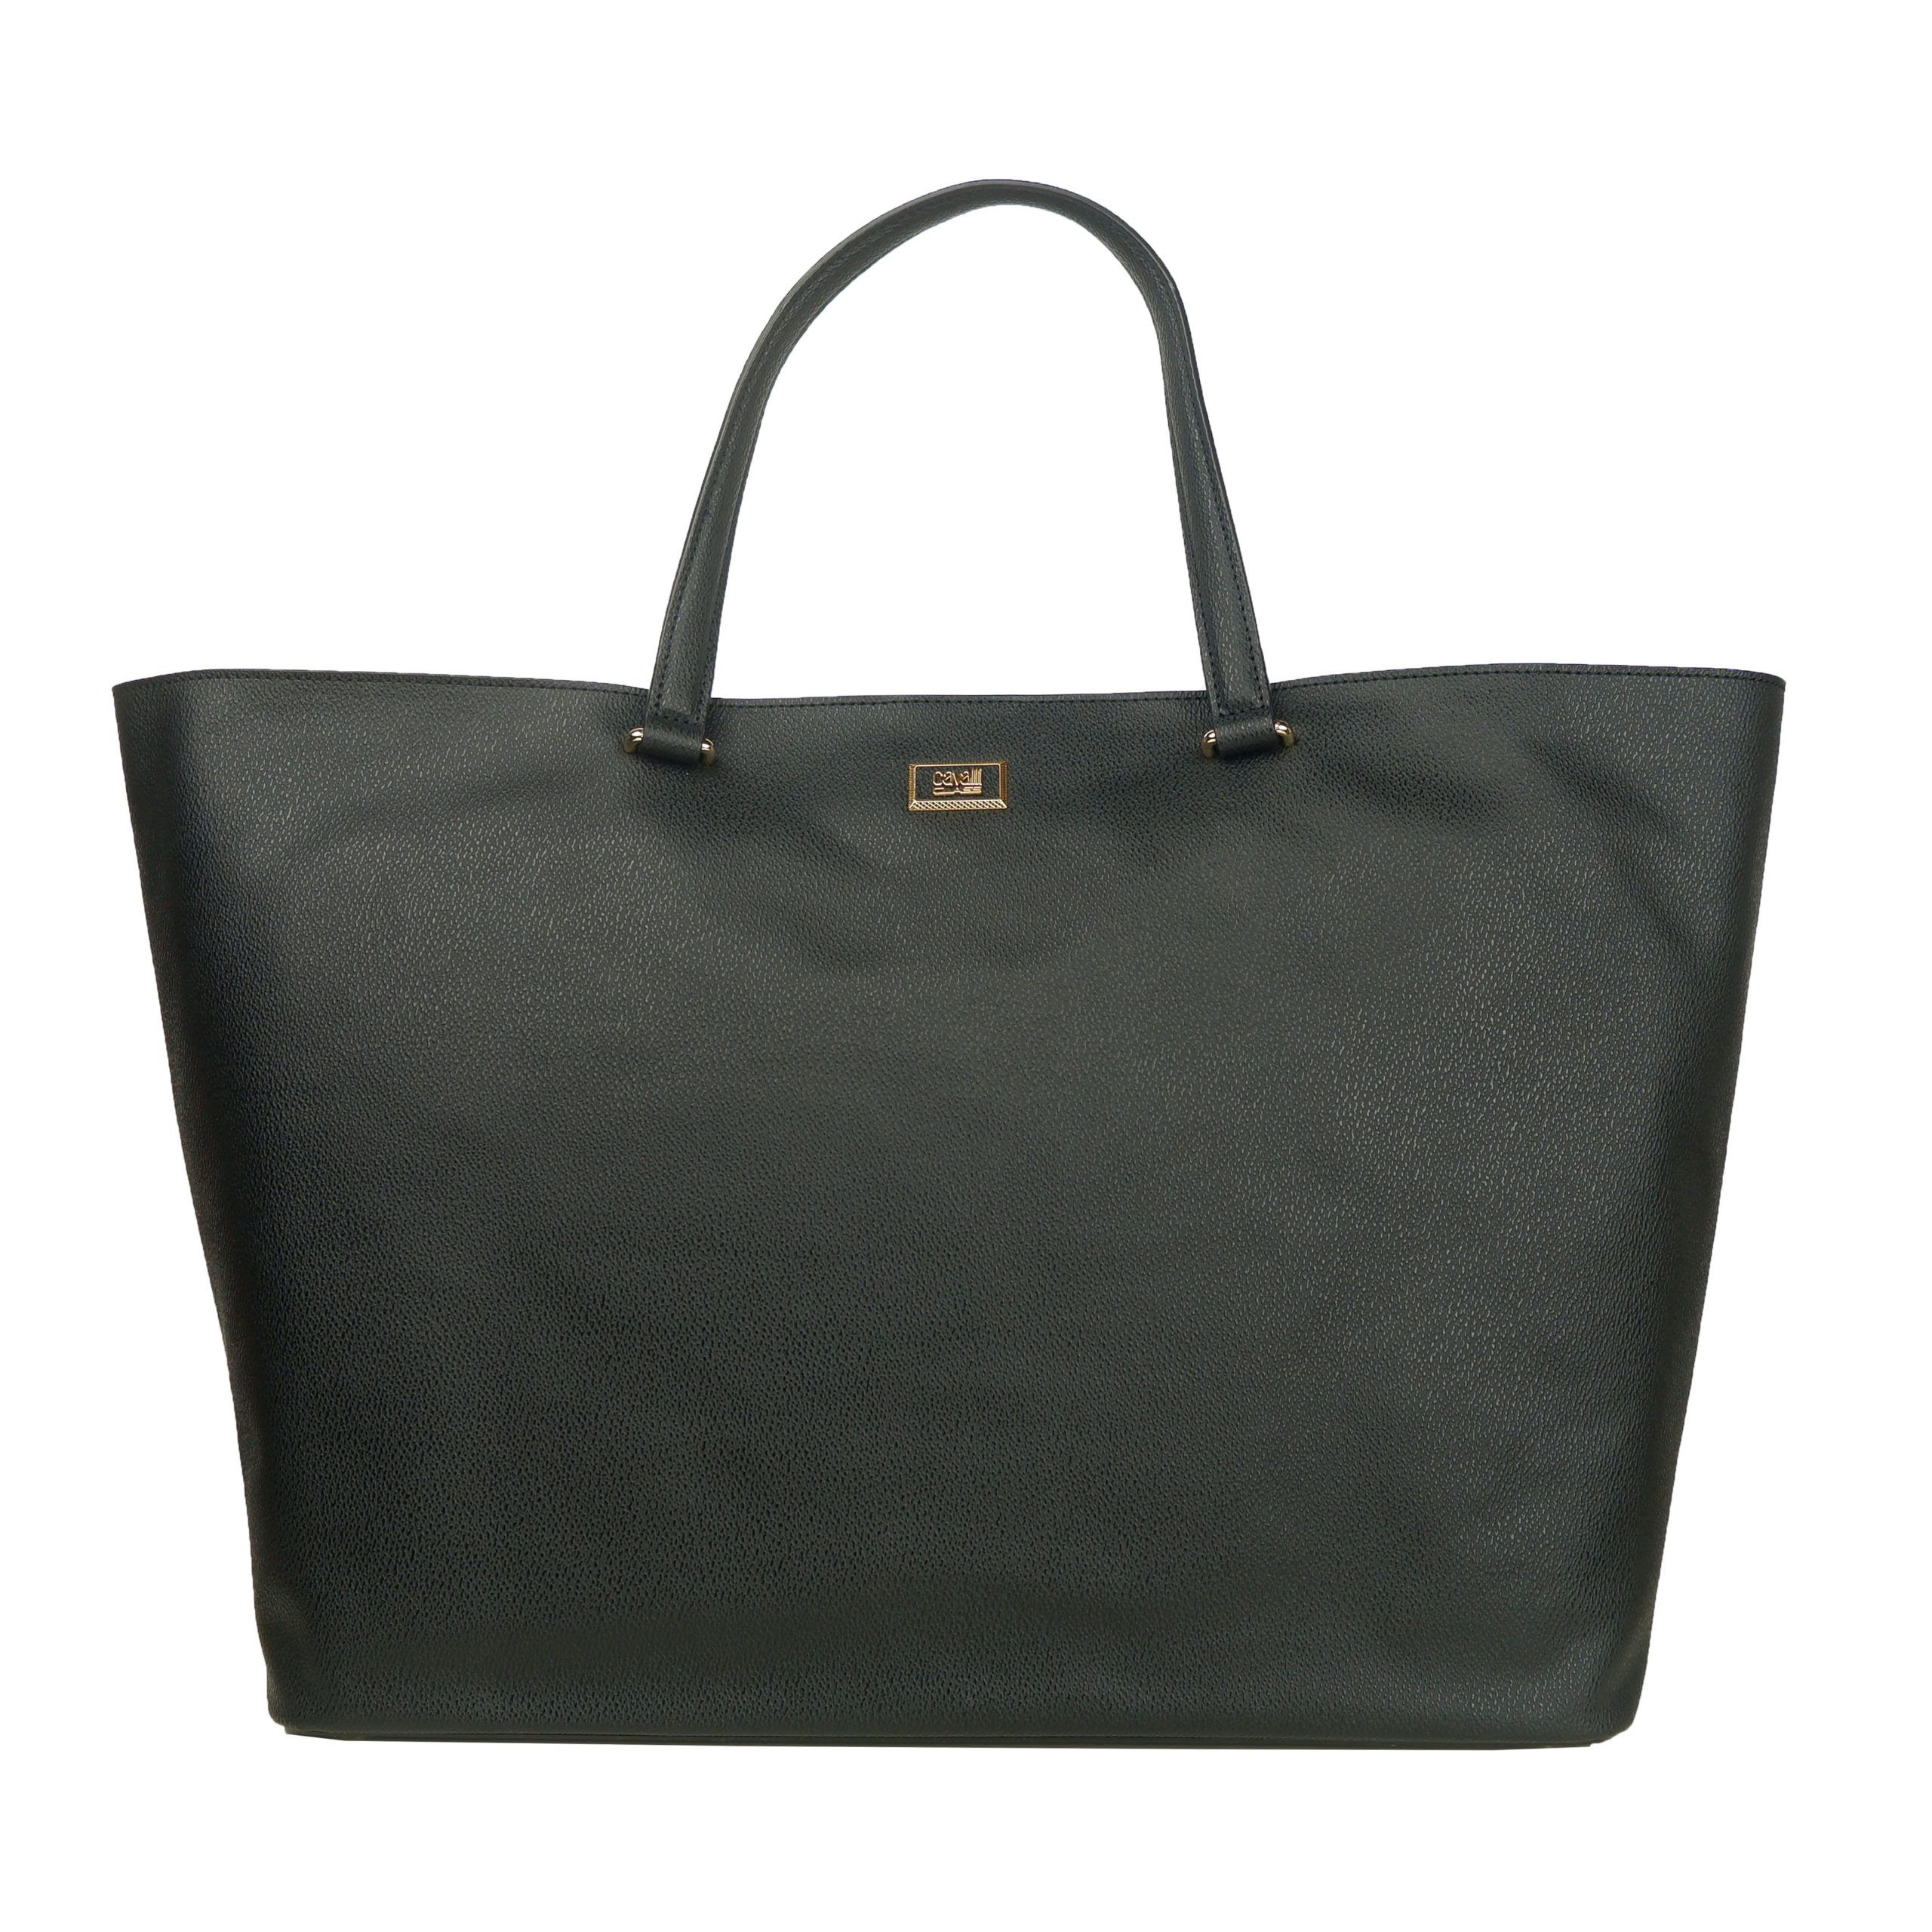 Cavalli class, shopping bag, black color, magnetic closure, light blue internal fantasy.